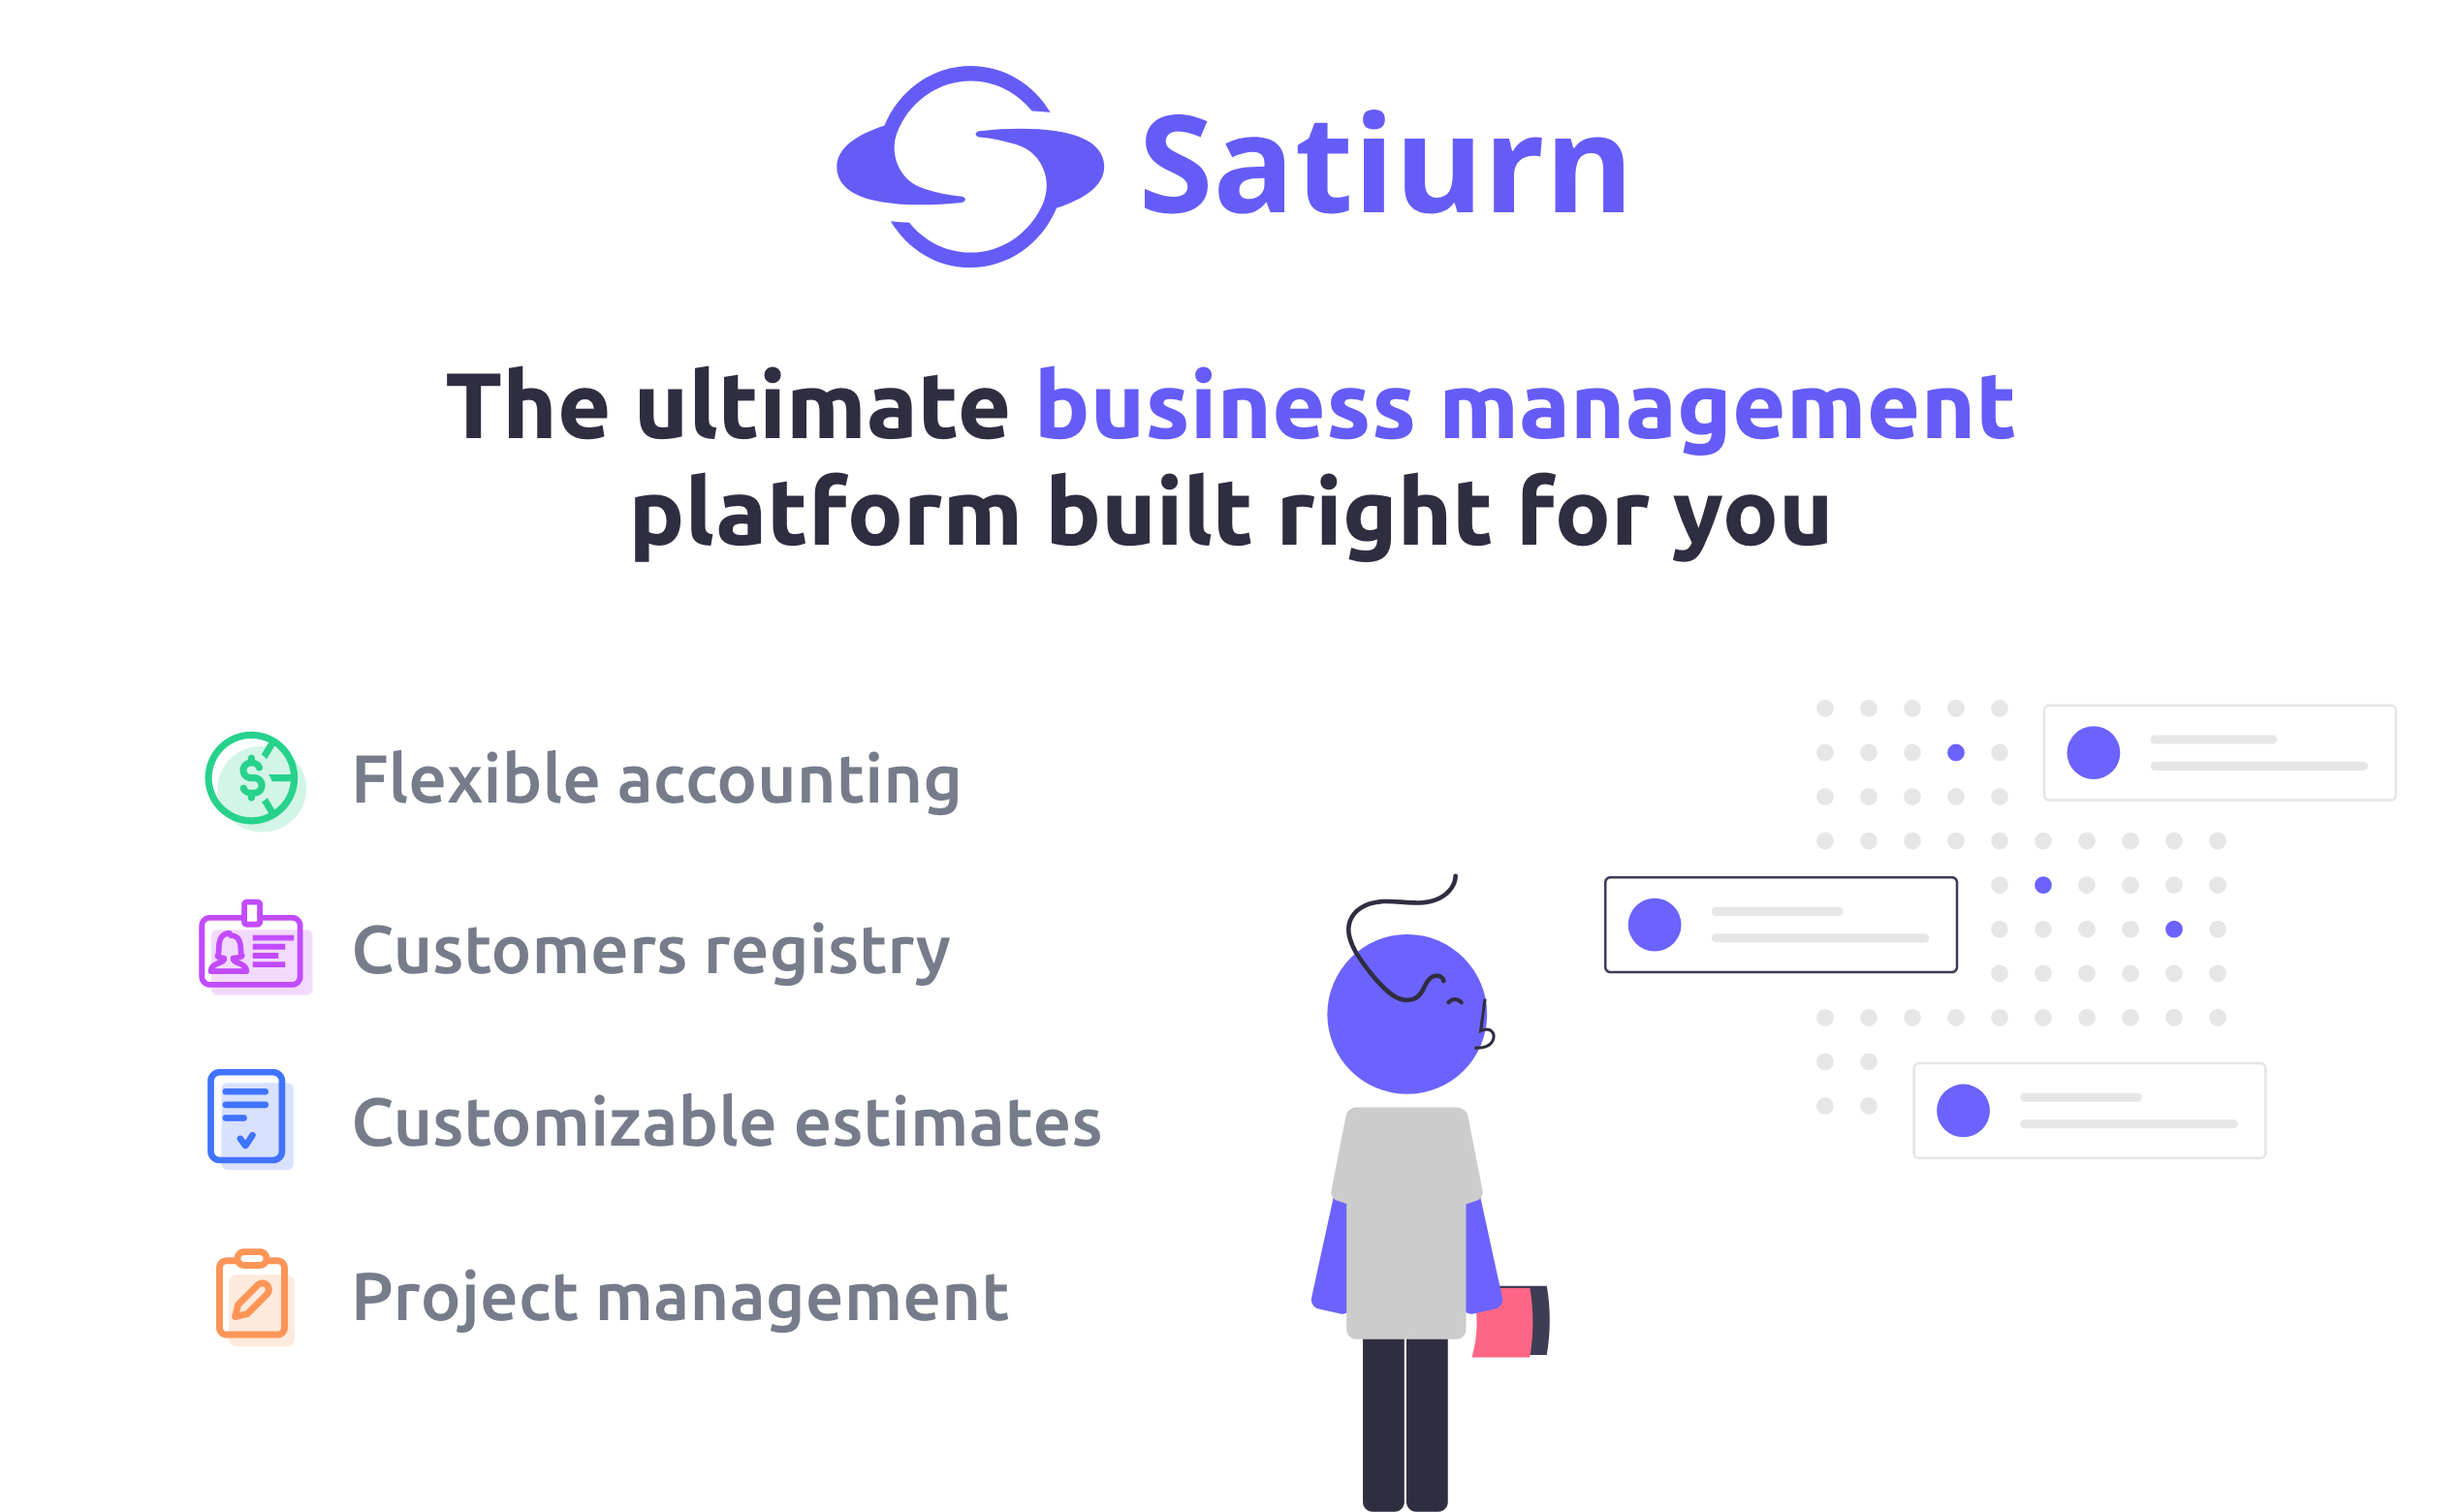 Find detailed information about Satiurn